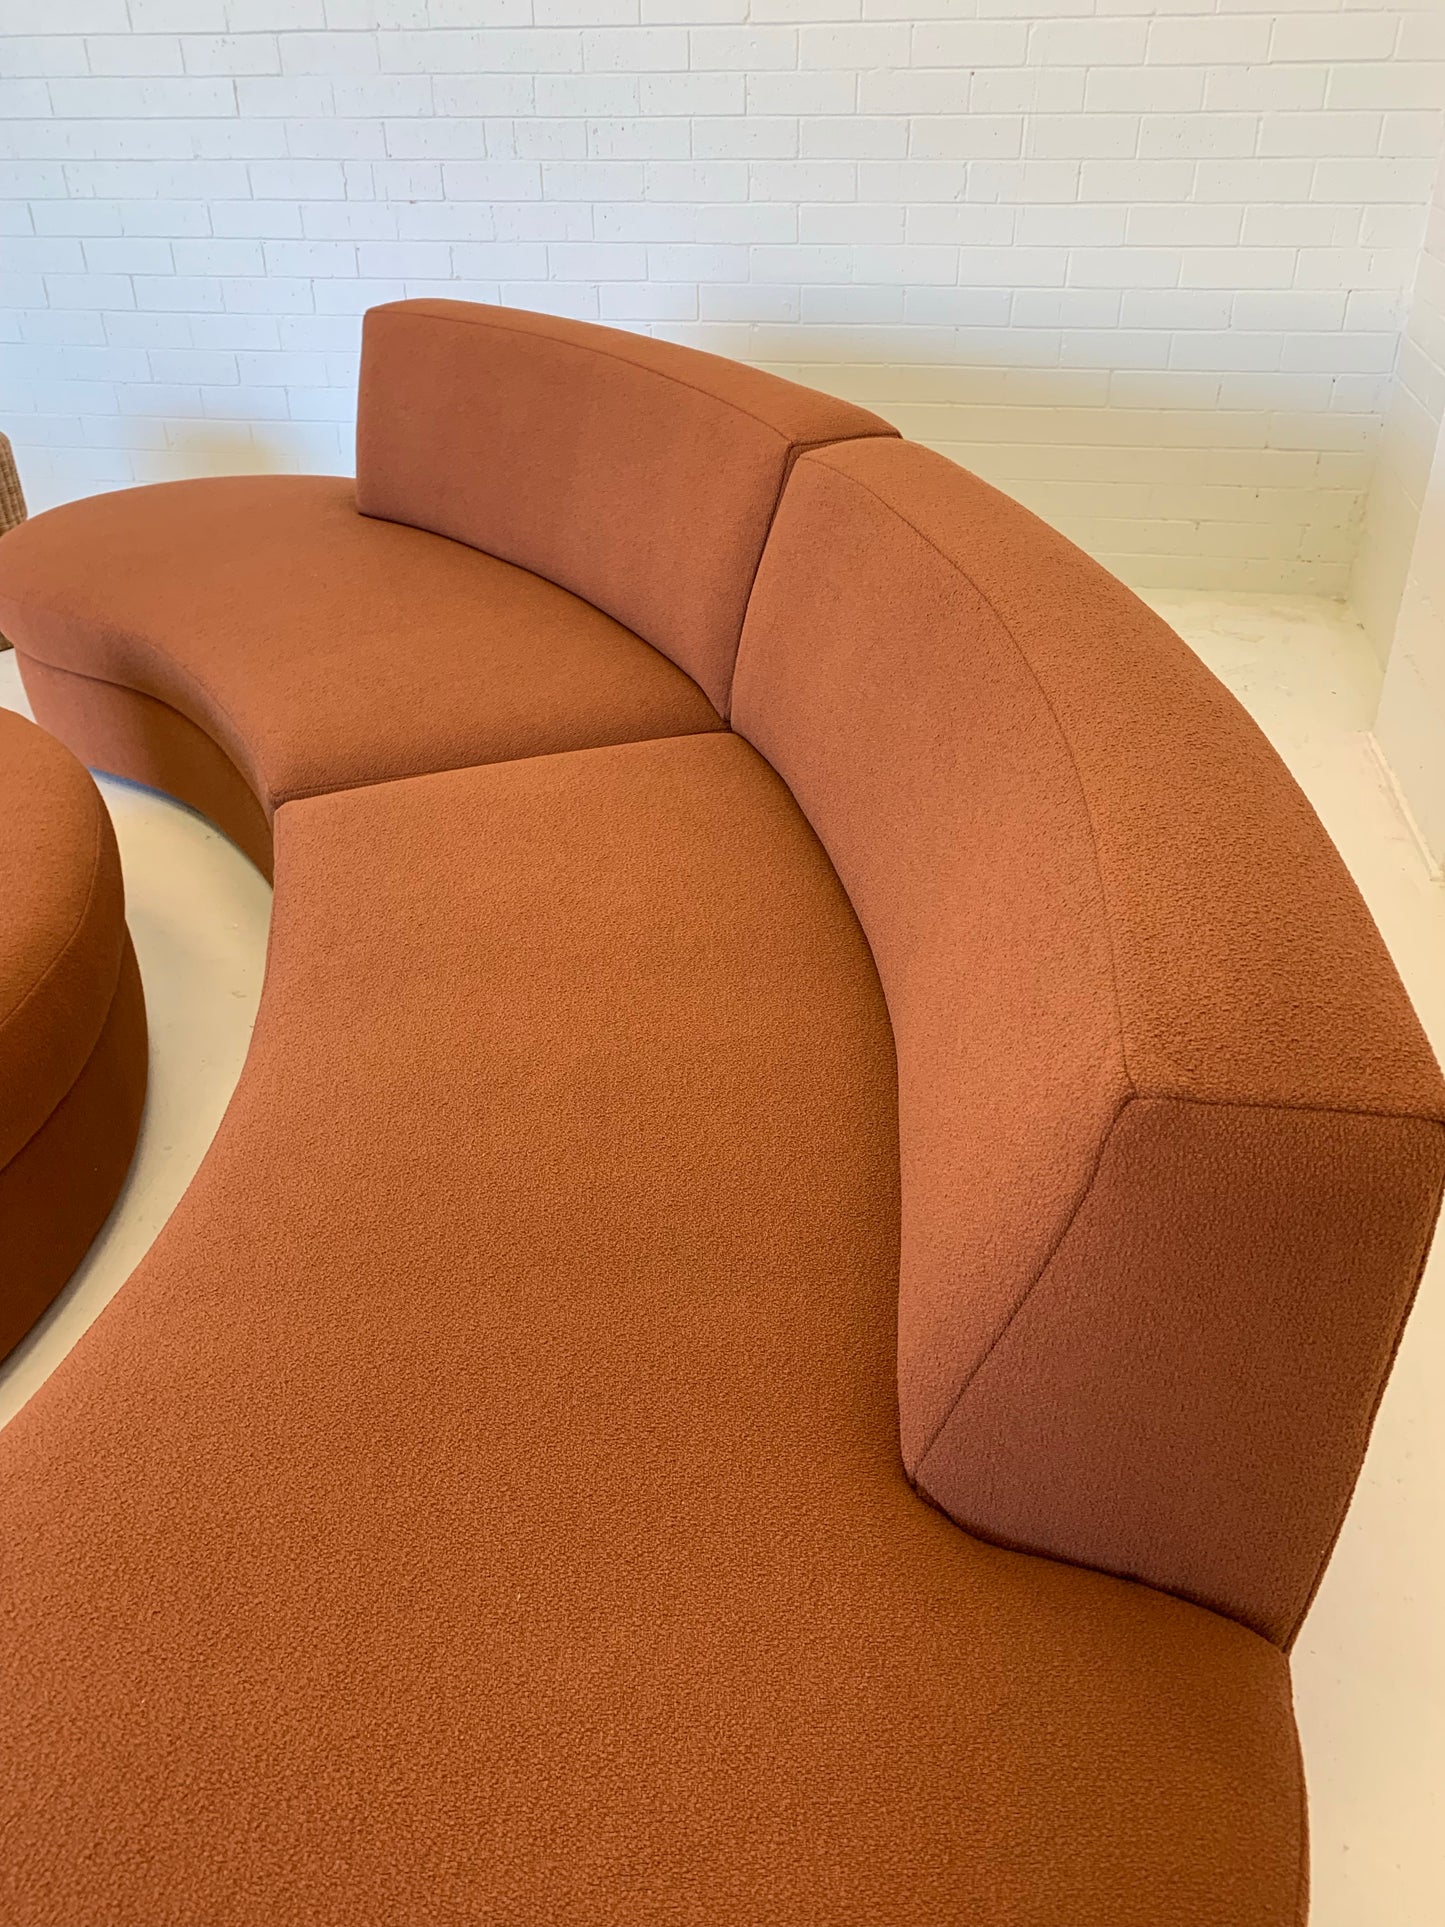 Boucle Curved Modular Sofa